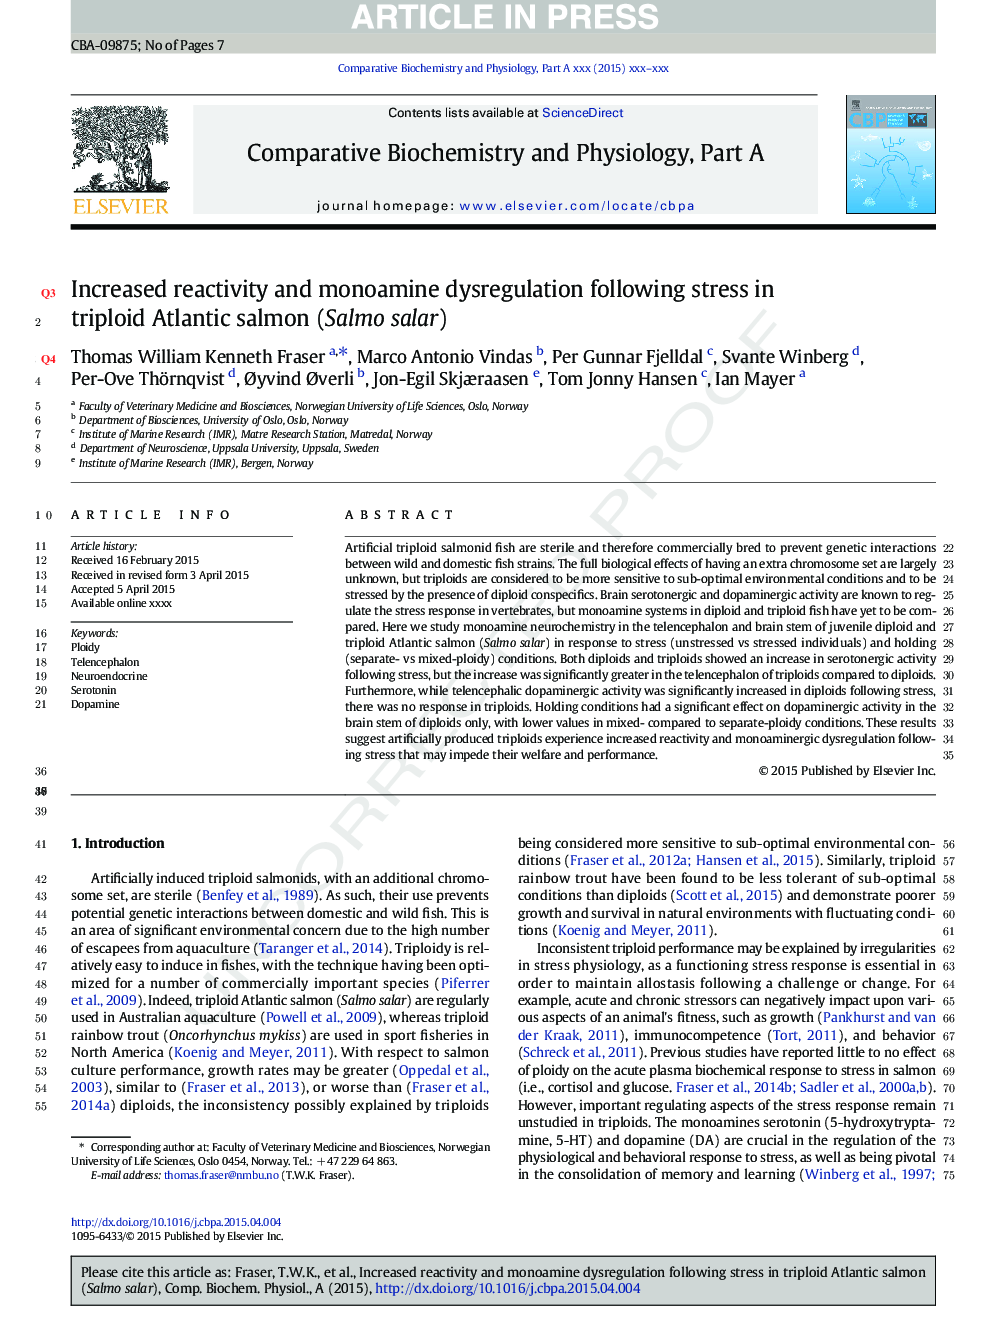 Increased reactivity and monoamine dysregulation following stress in triploid Atlantic salmon (Salmo salar)